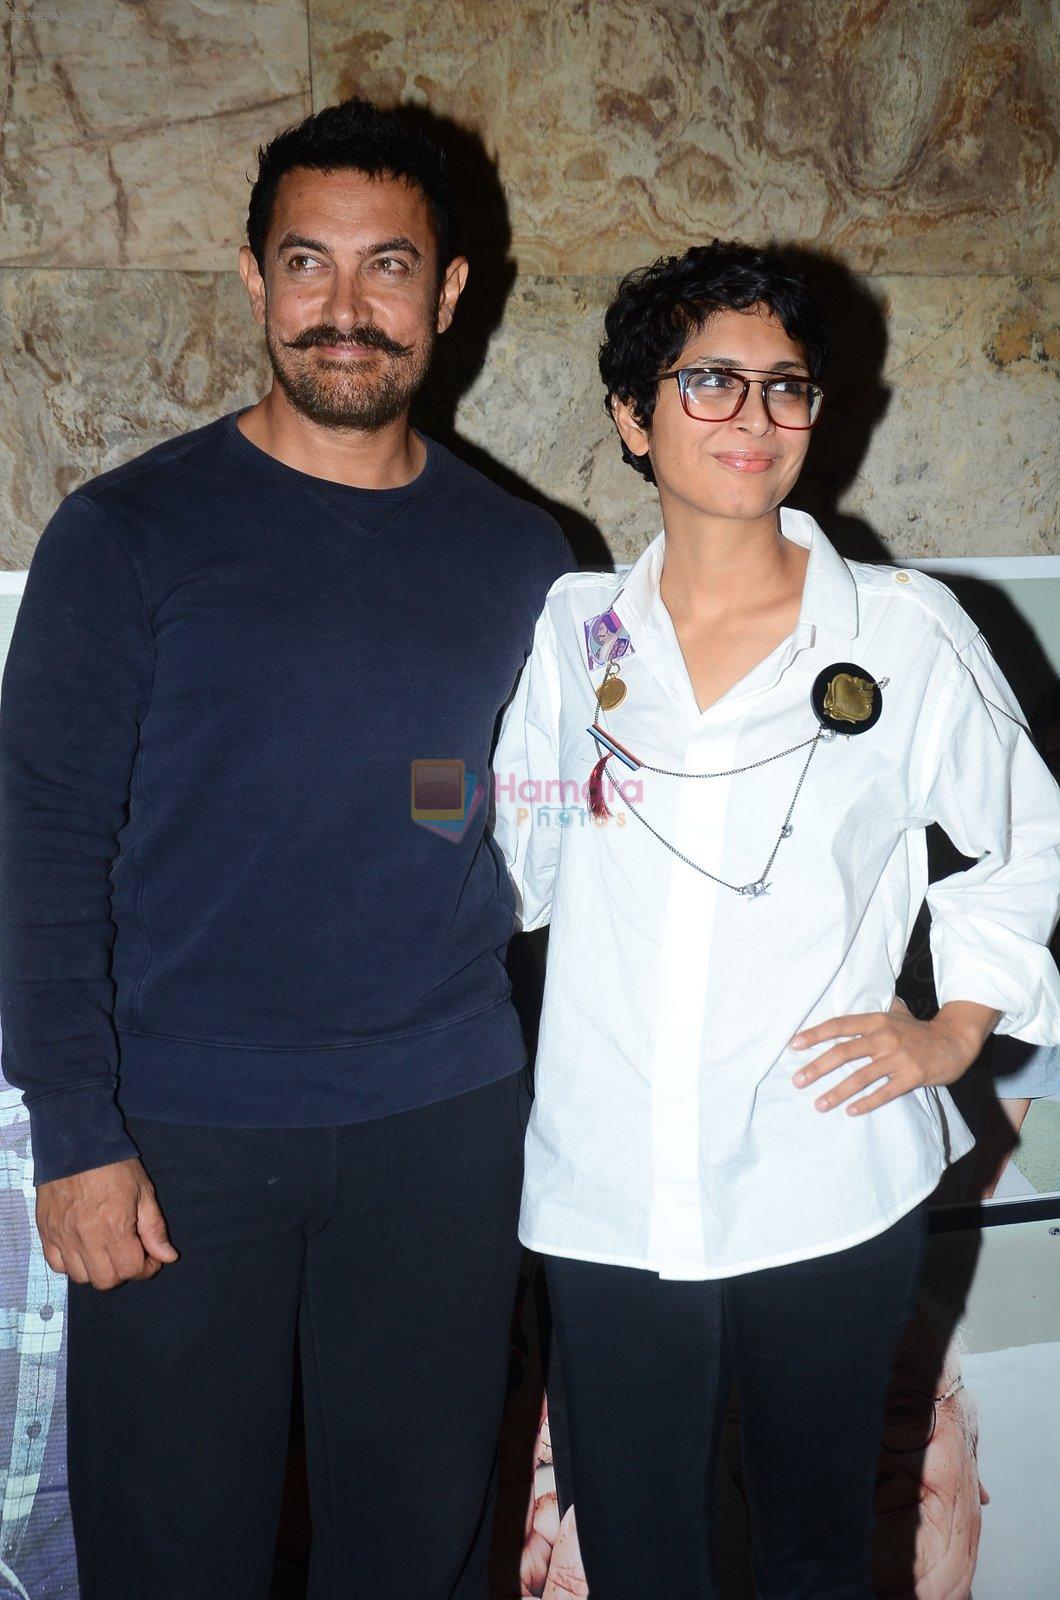 Aamir Khan, Kiran Rao at Kapoor N Sons screening on 15th March 2016